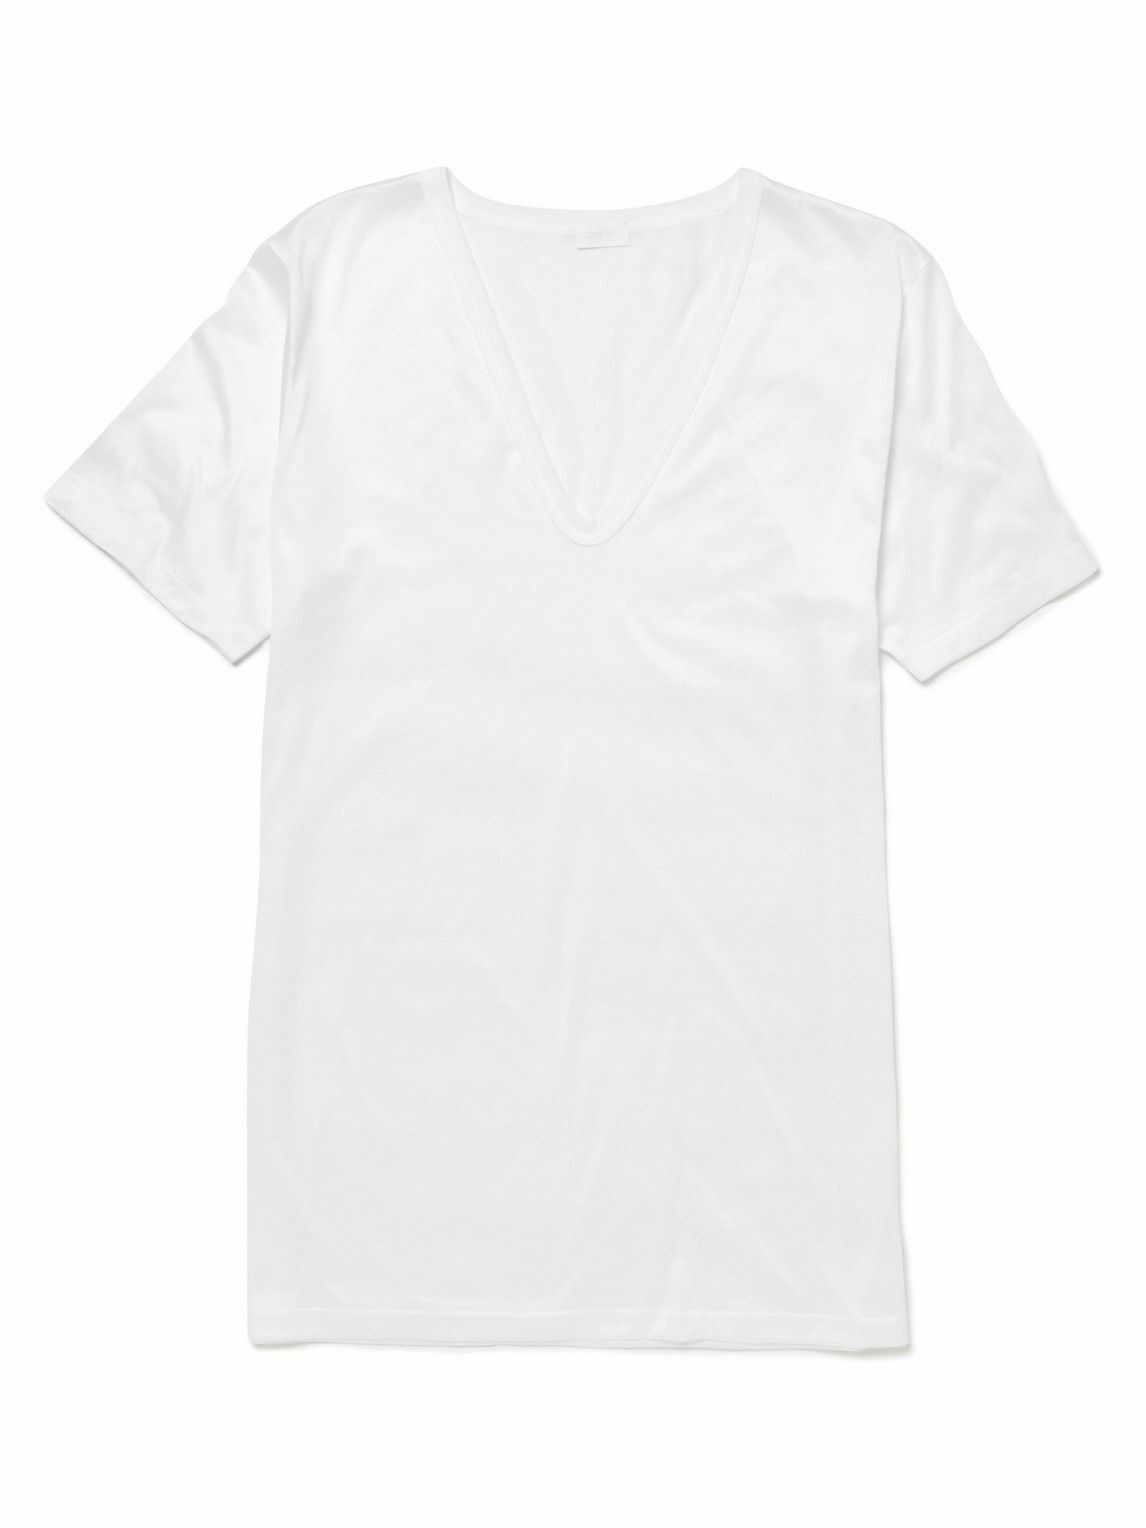 Photo: Zimmerli - Royal Classic Cotton T-Shirt - White